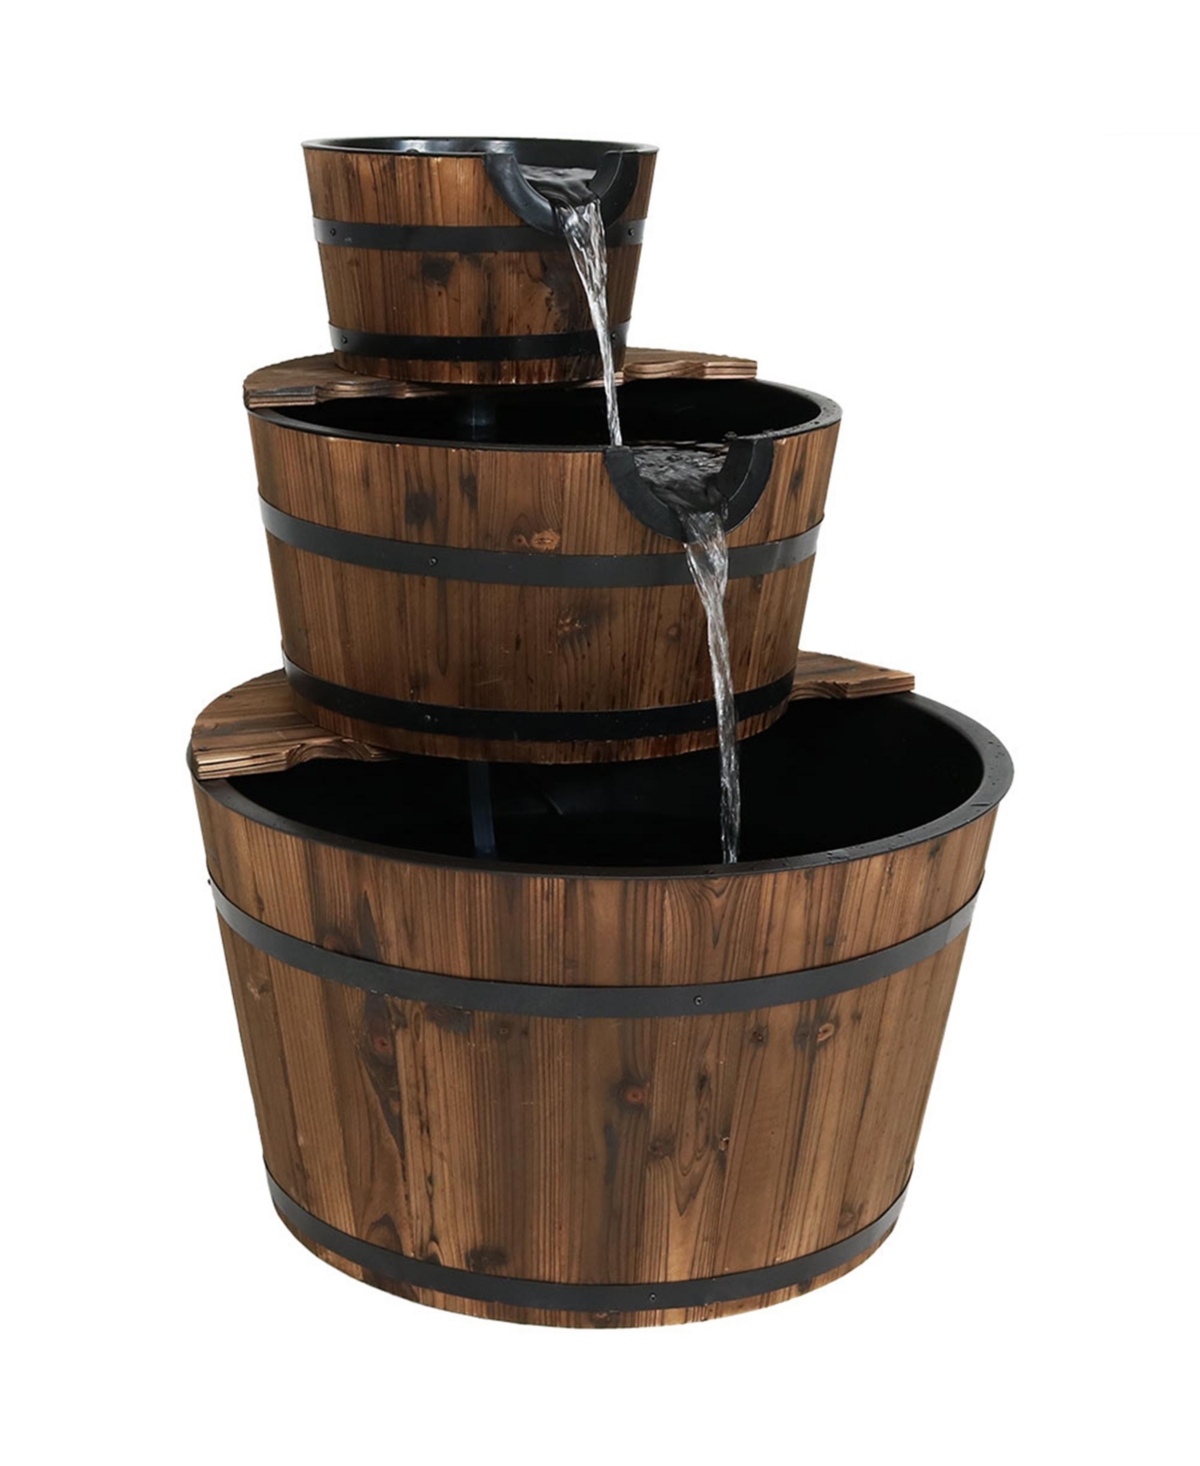 Rustic 3-Tier Wooden Fir Barrel-Style Water Fountain - 30 in - Brown